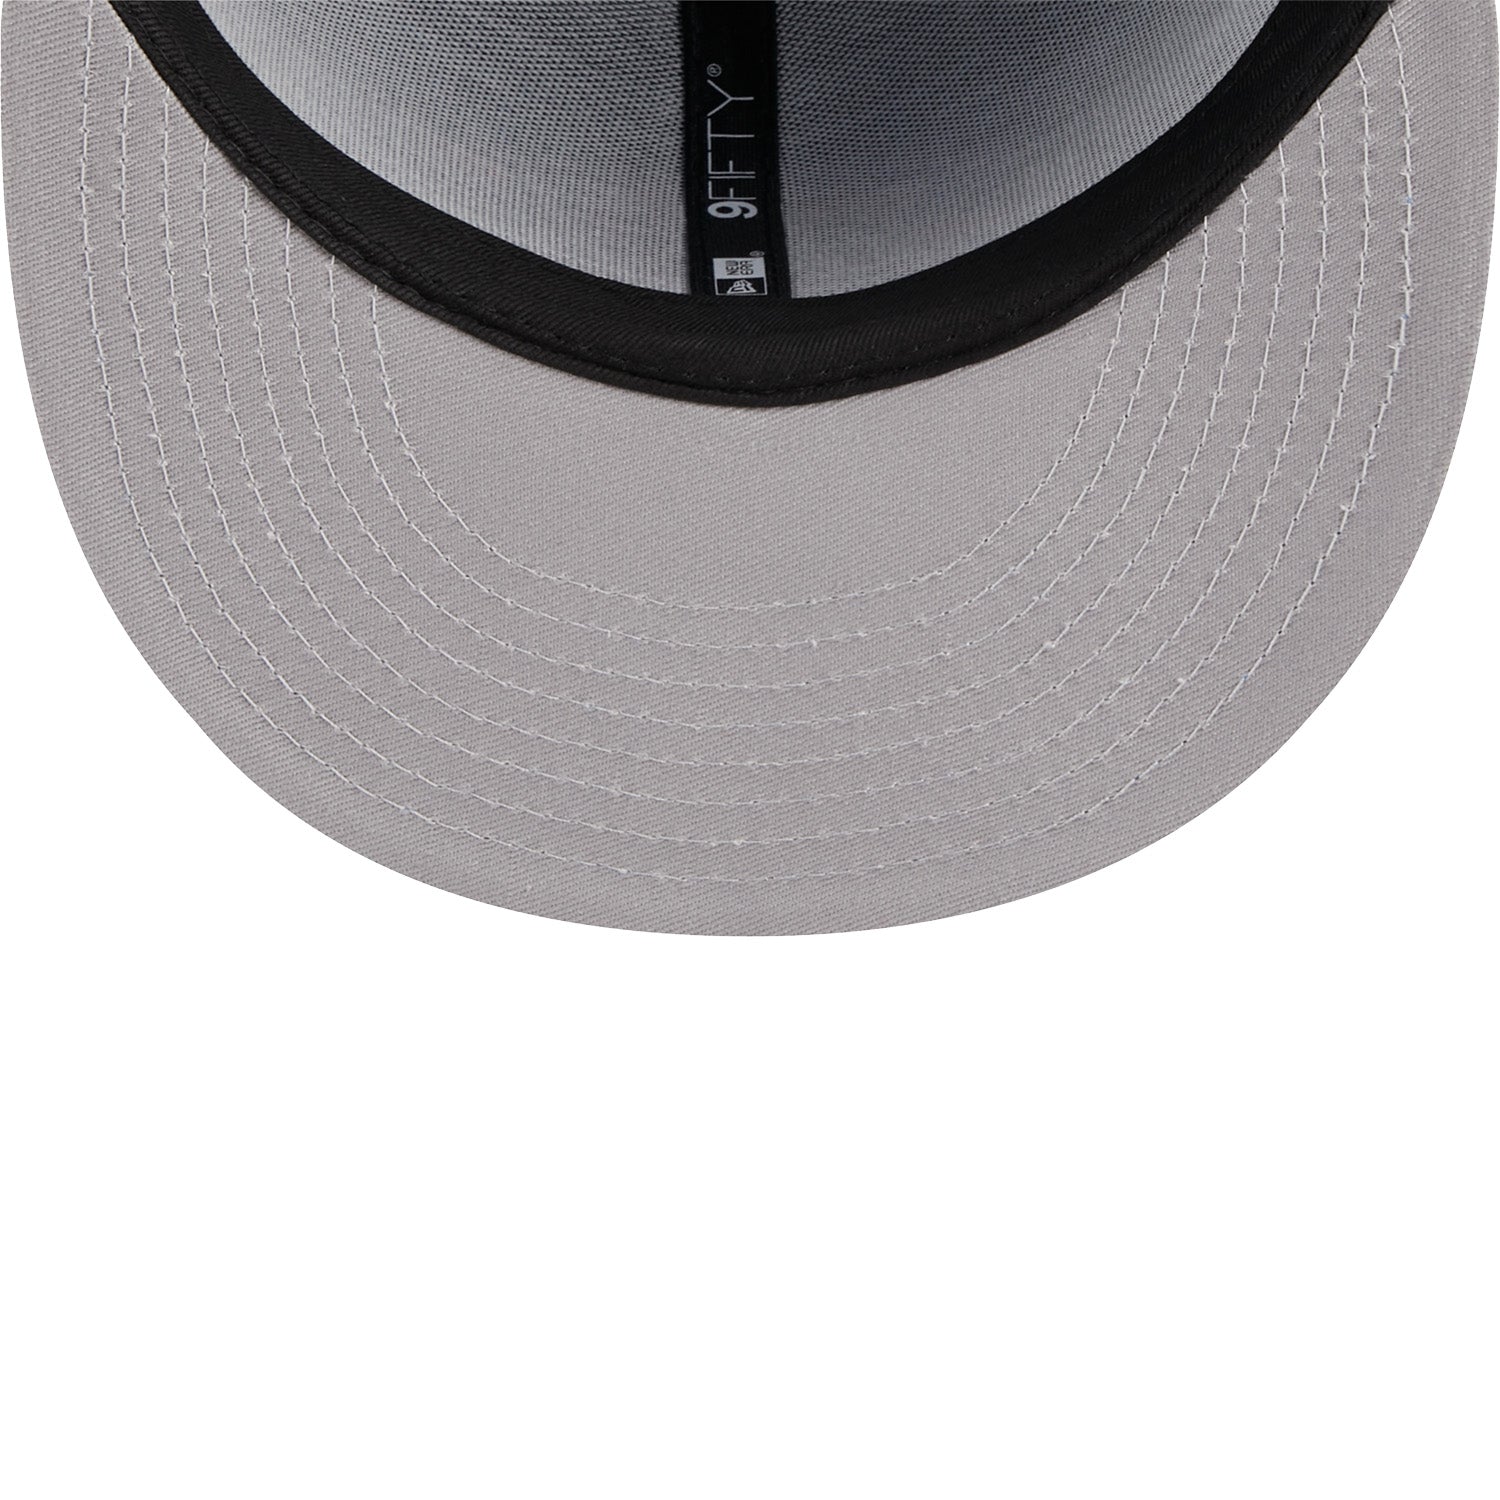 New Era Oklahoma City Thunder Black & White Logo 59FIFTY Fitted Hat